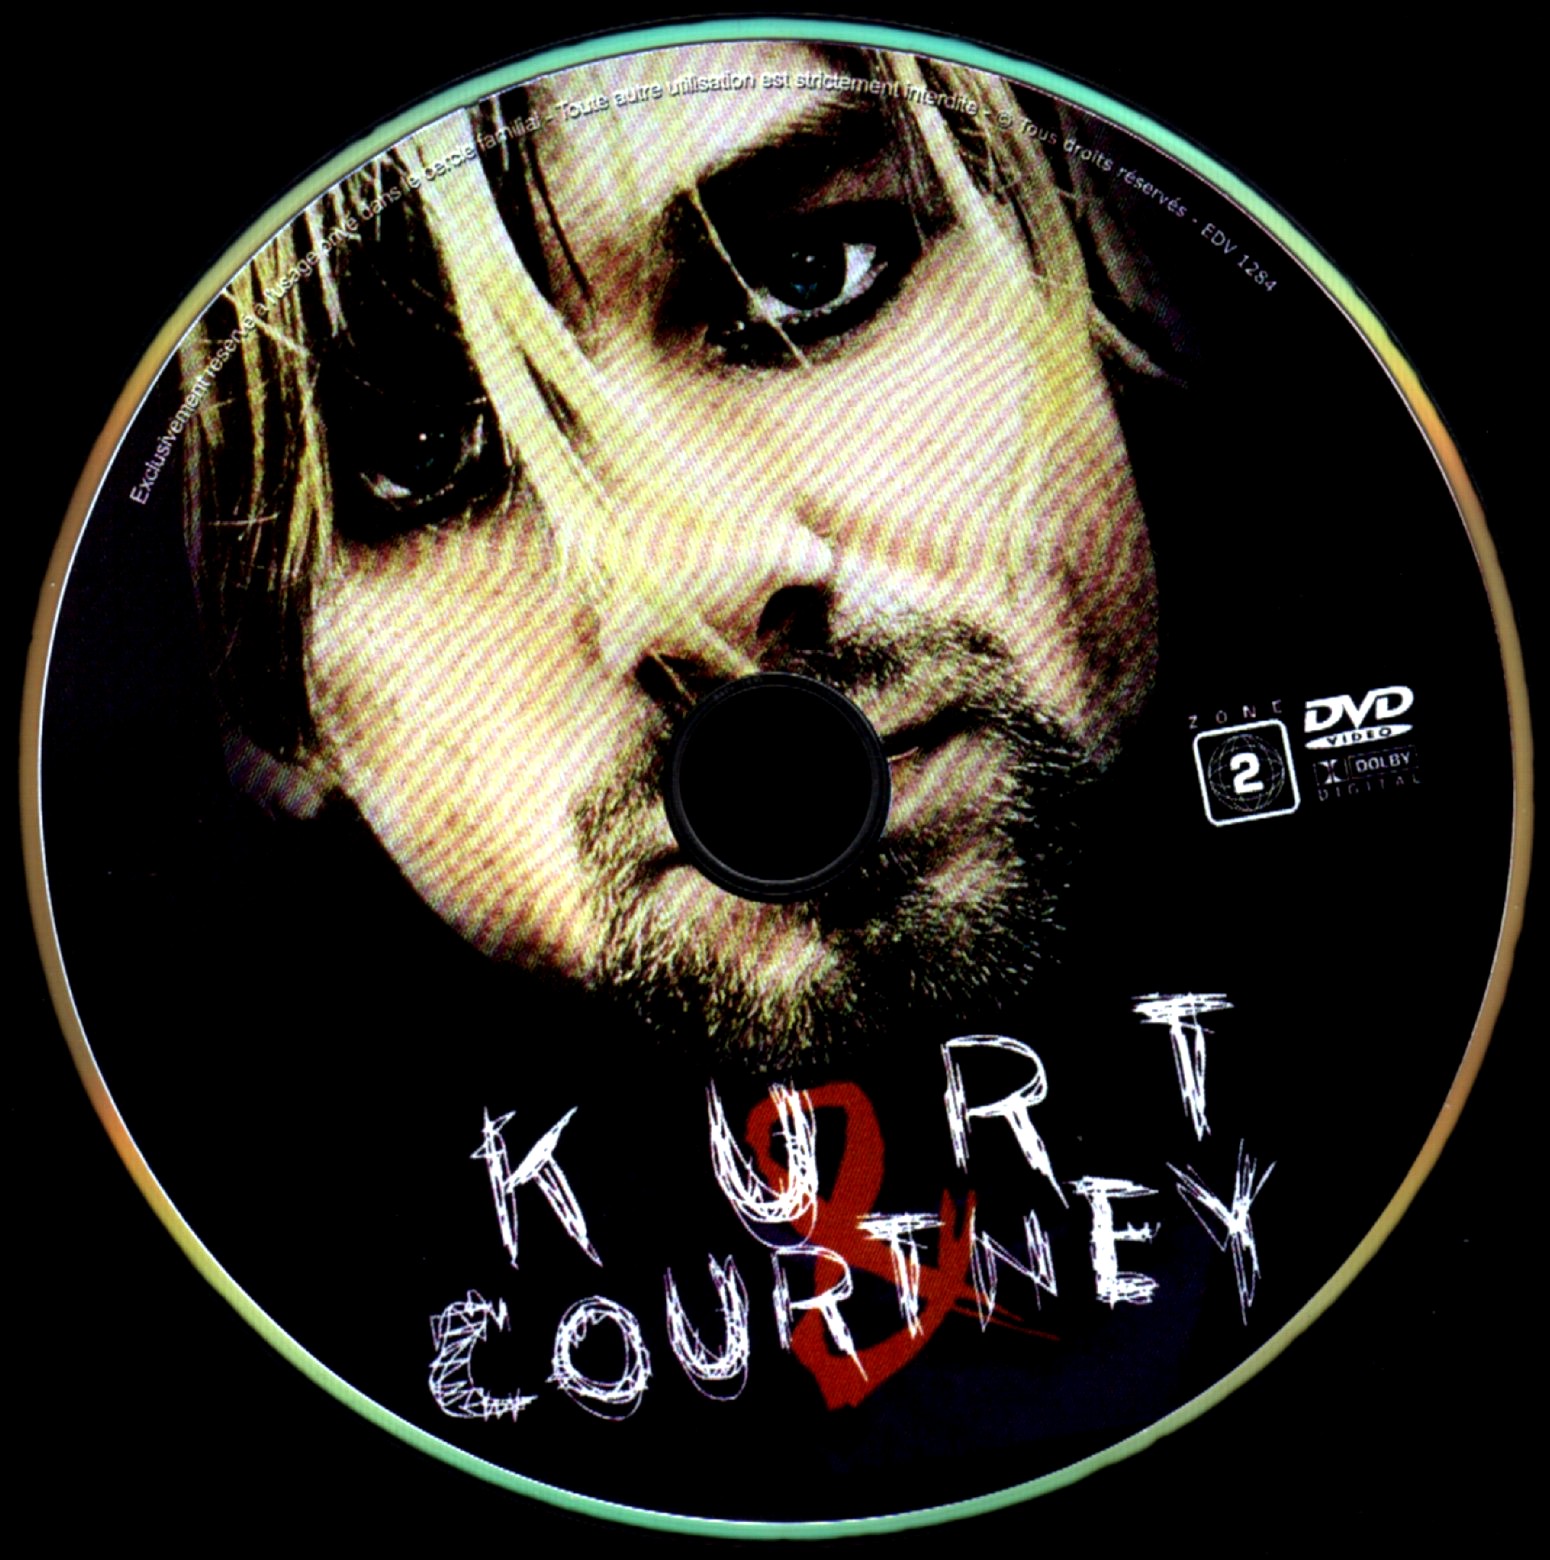 Kurt and Courtney